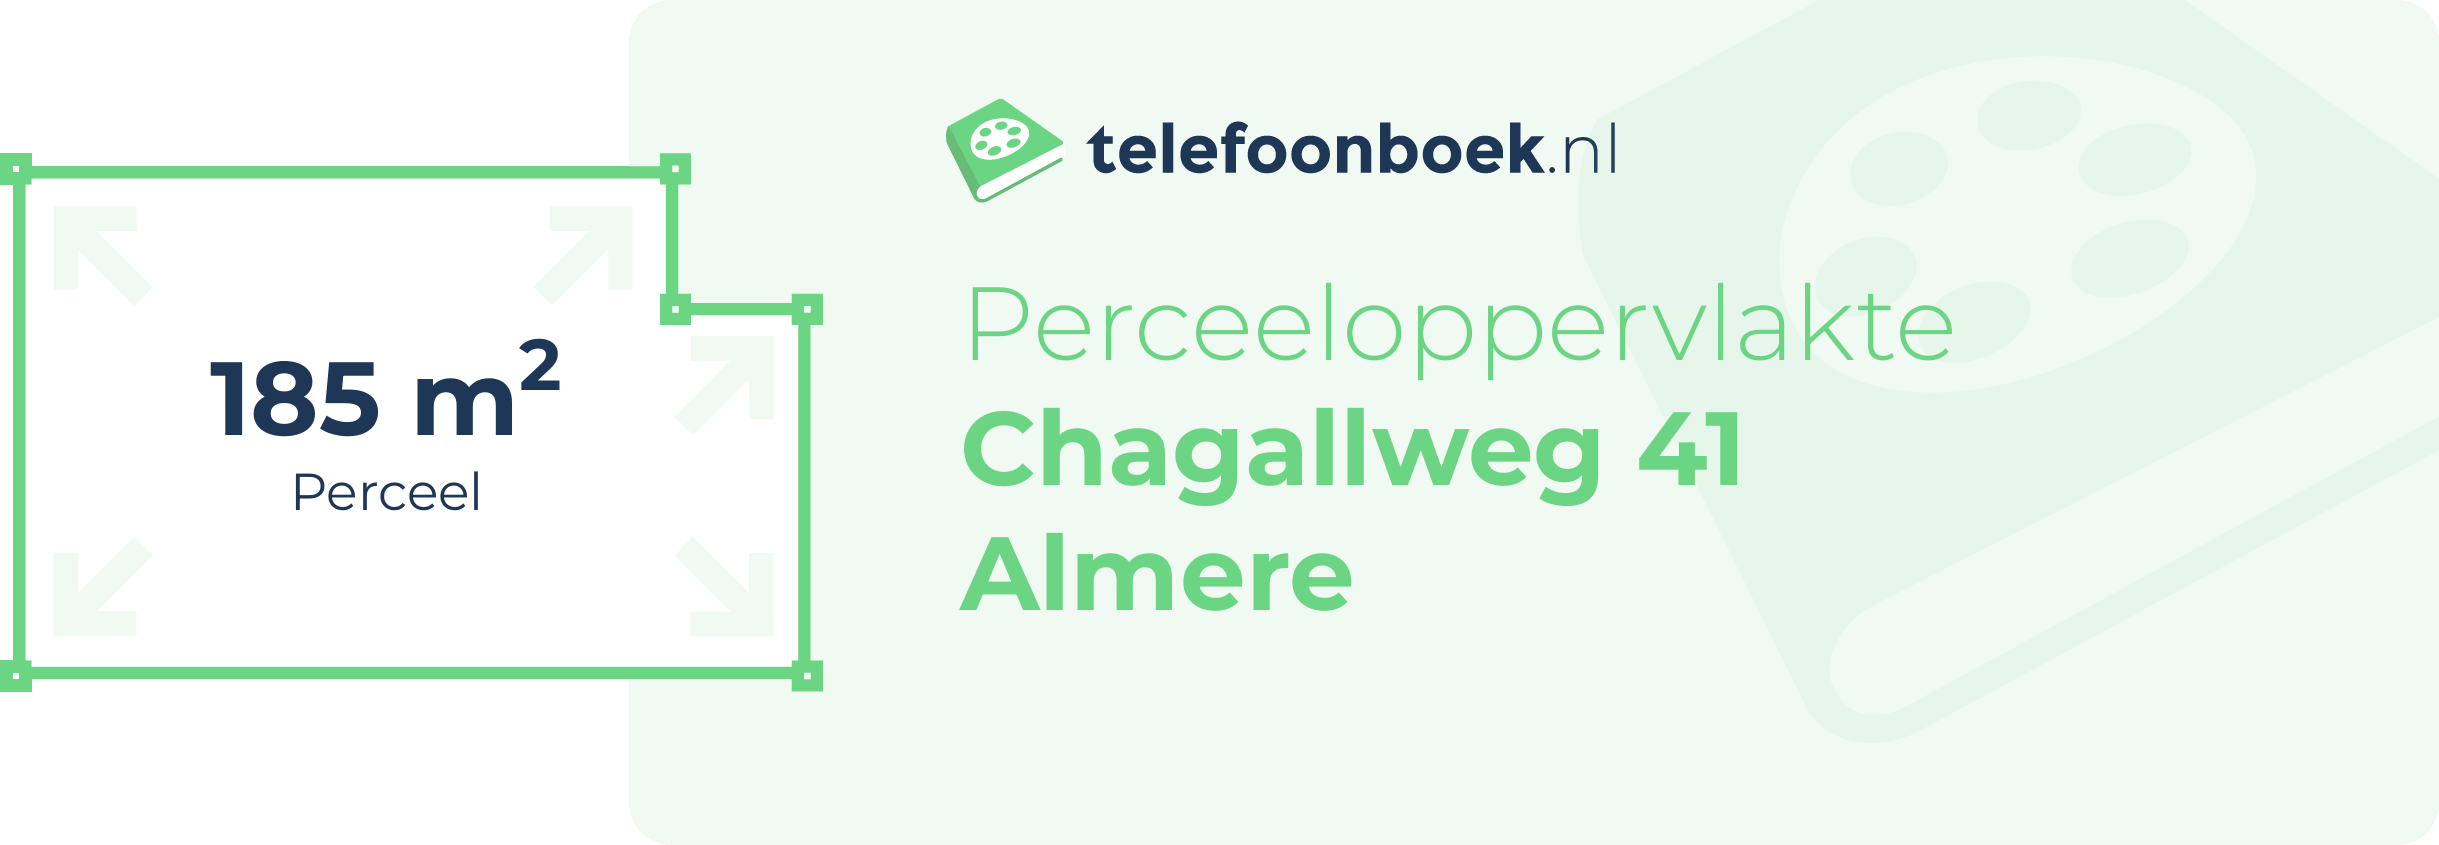 Perceeloppervlakte Chagallweg 41 Almere